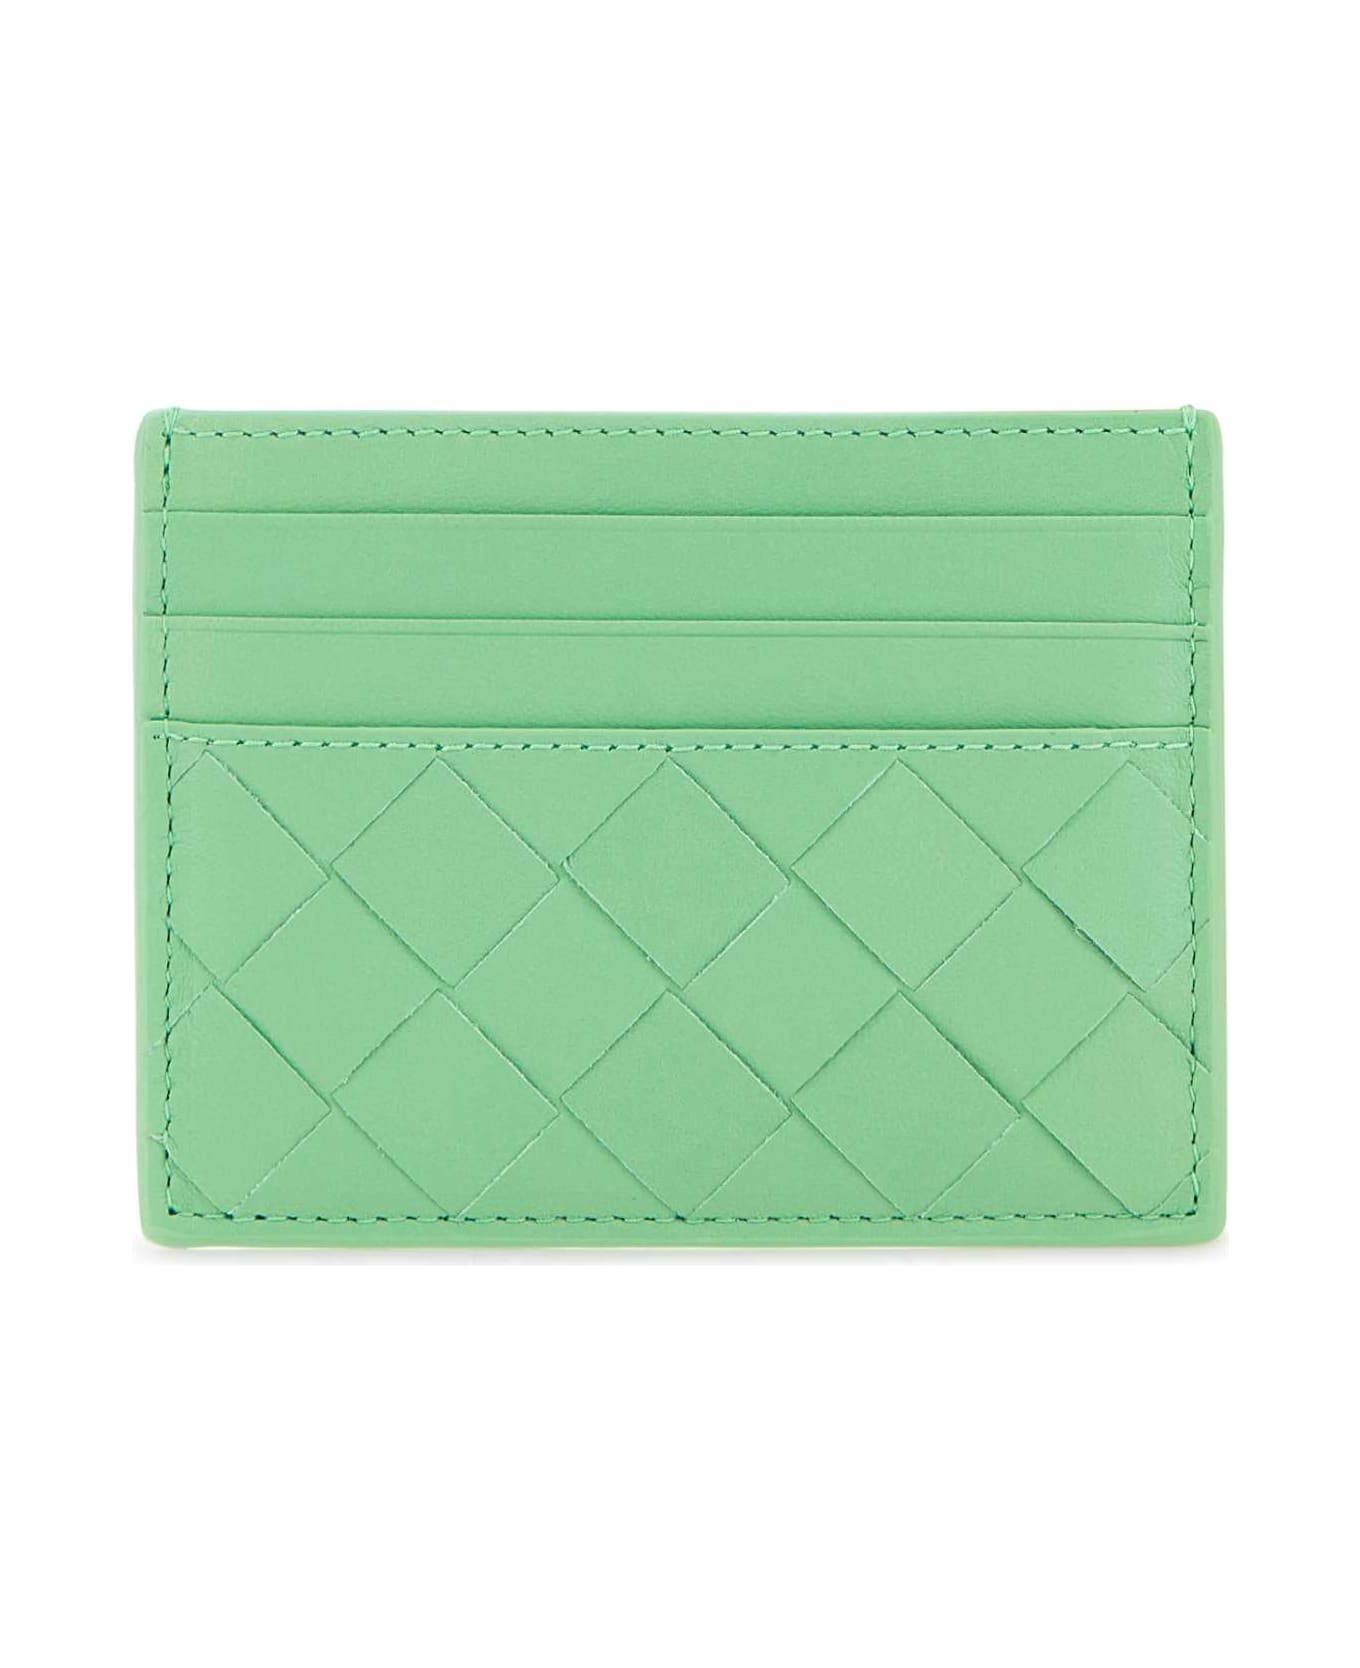 Bottega Veneta Mint Green Leather Card Holder - SIRENMINTGOLDEN 財布